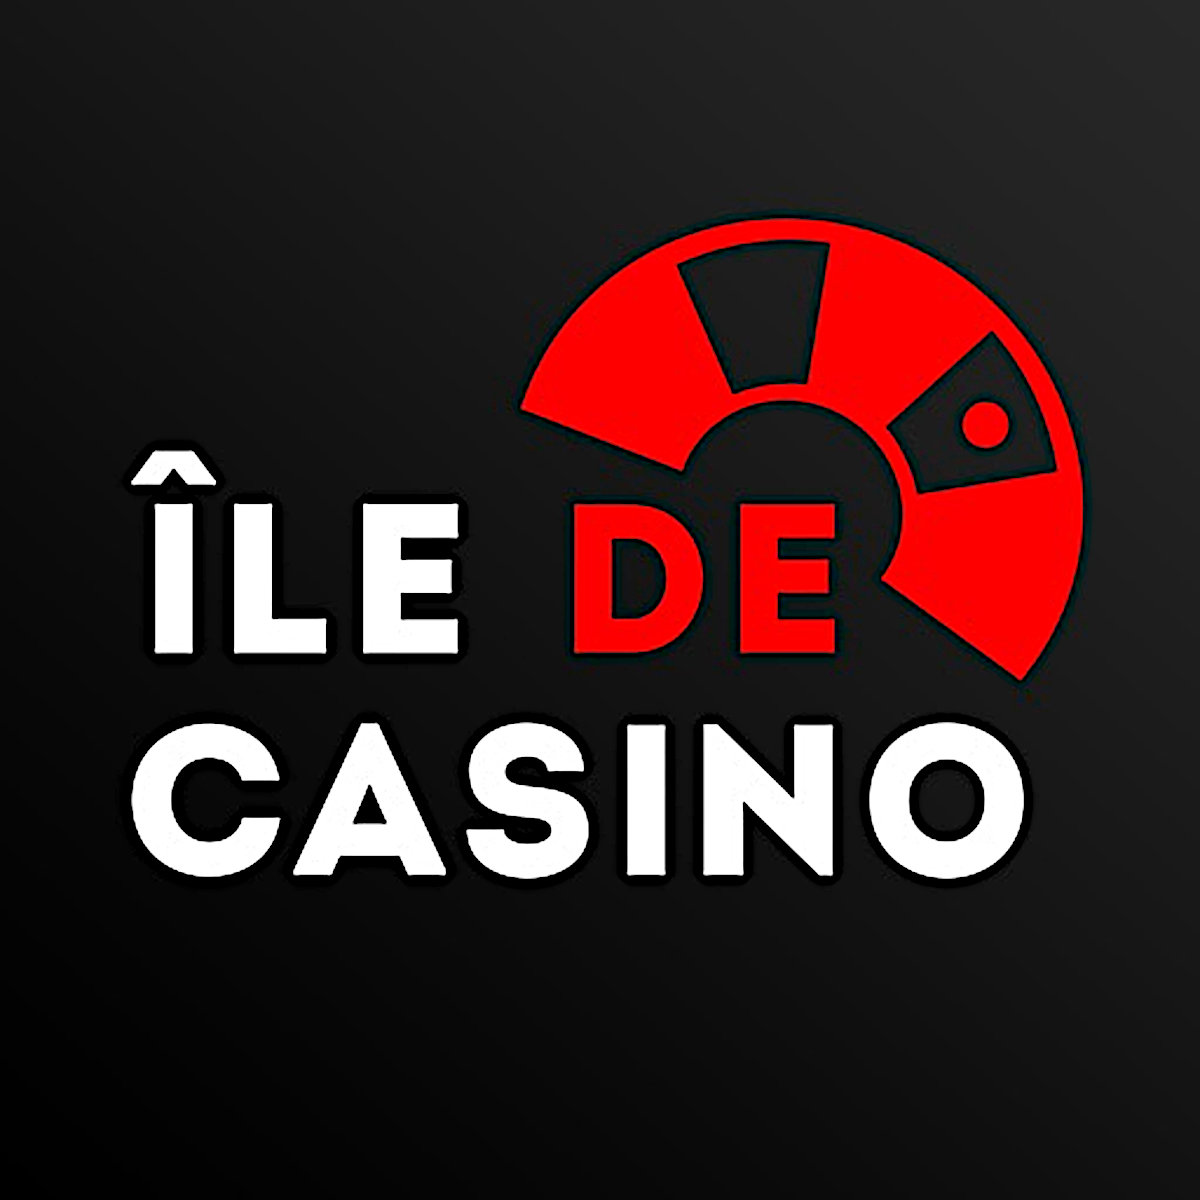 Ile de Casino
Le meilleur casino en ligne !